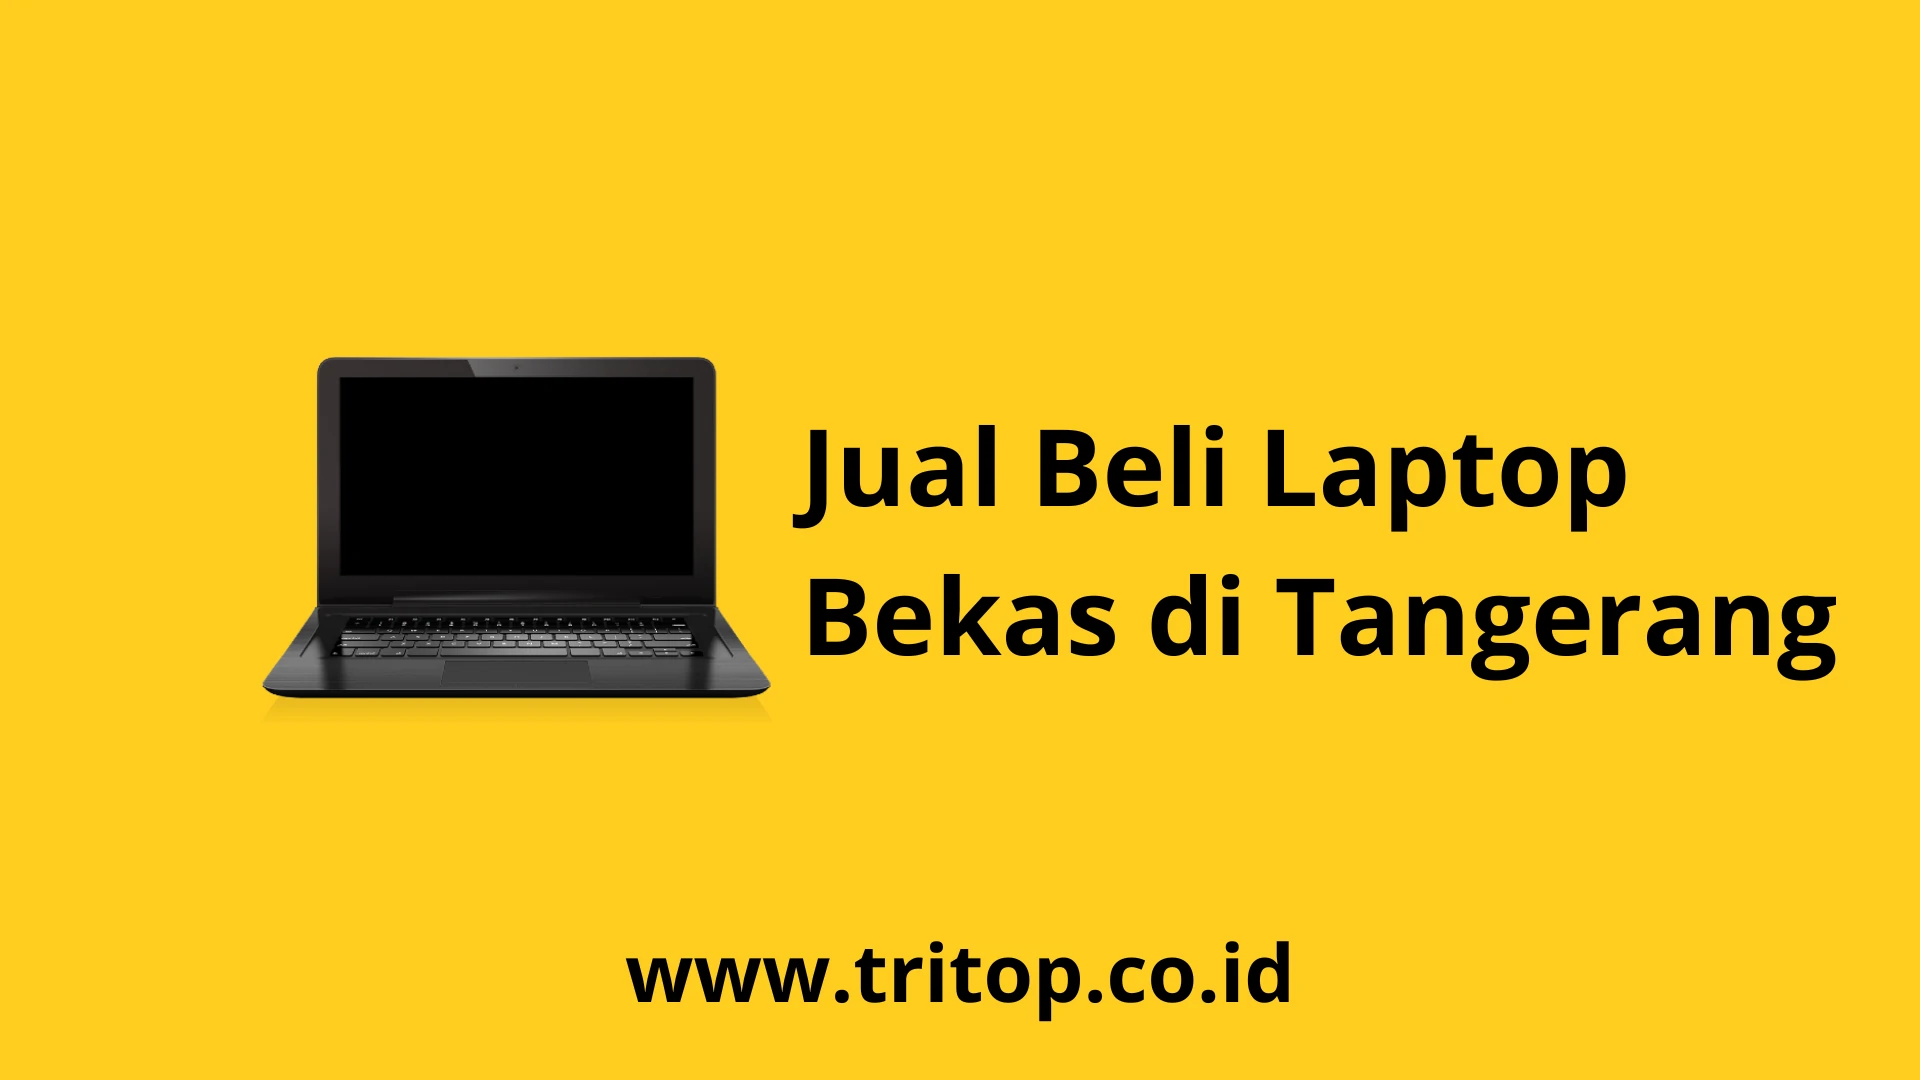 Jual Beli Laptop Bekas Tangerang Tritop.co.id